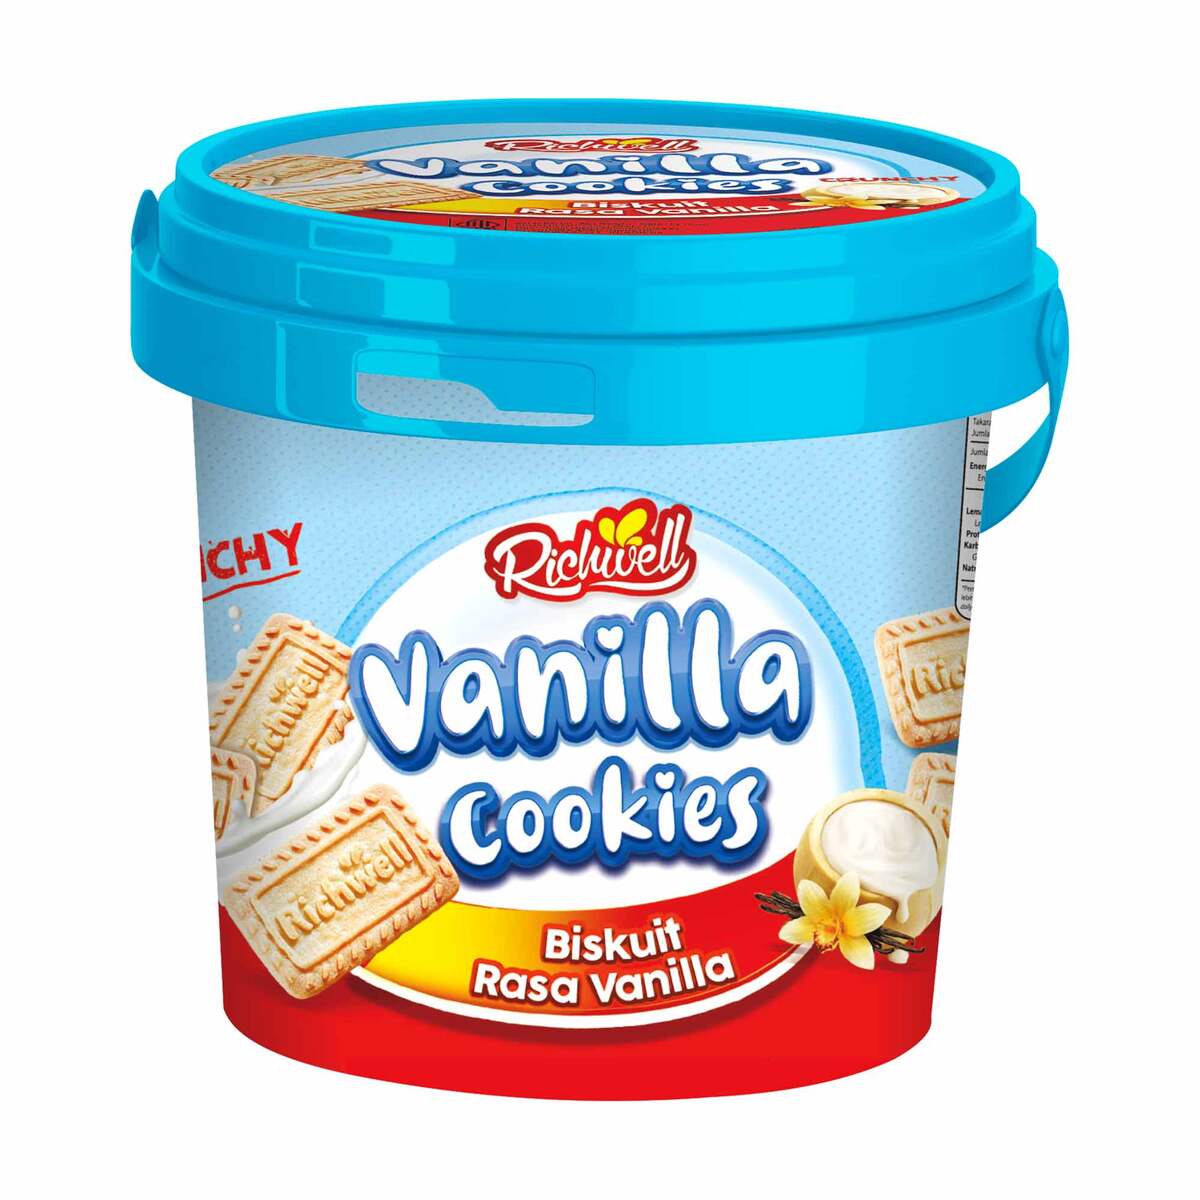 Richwell Vanilla Cookies 400 g